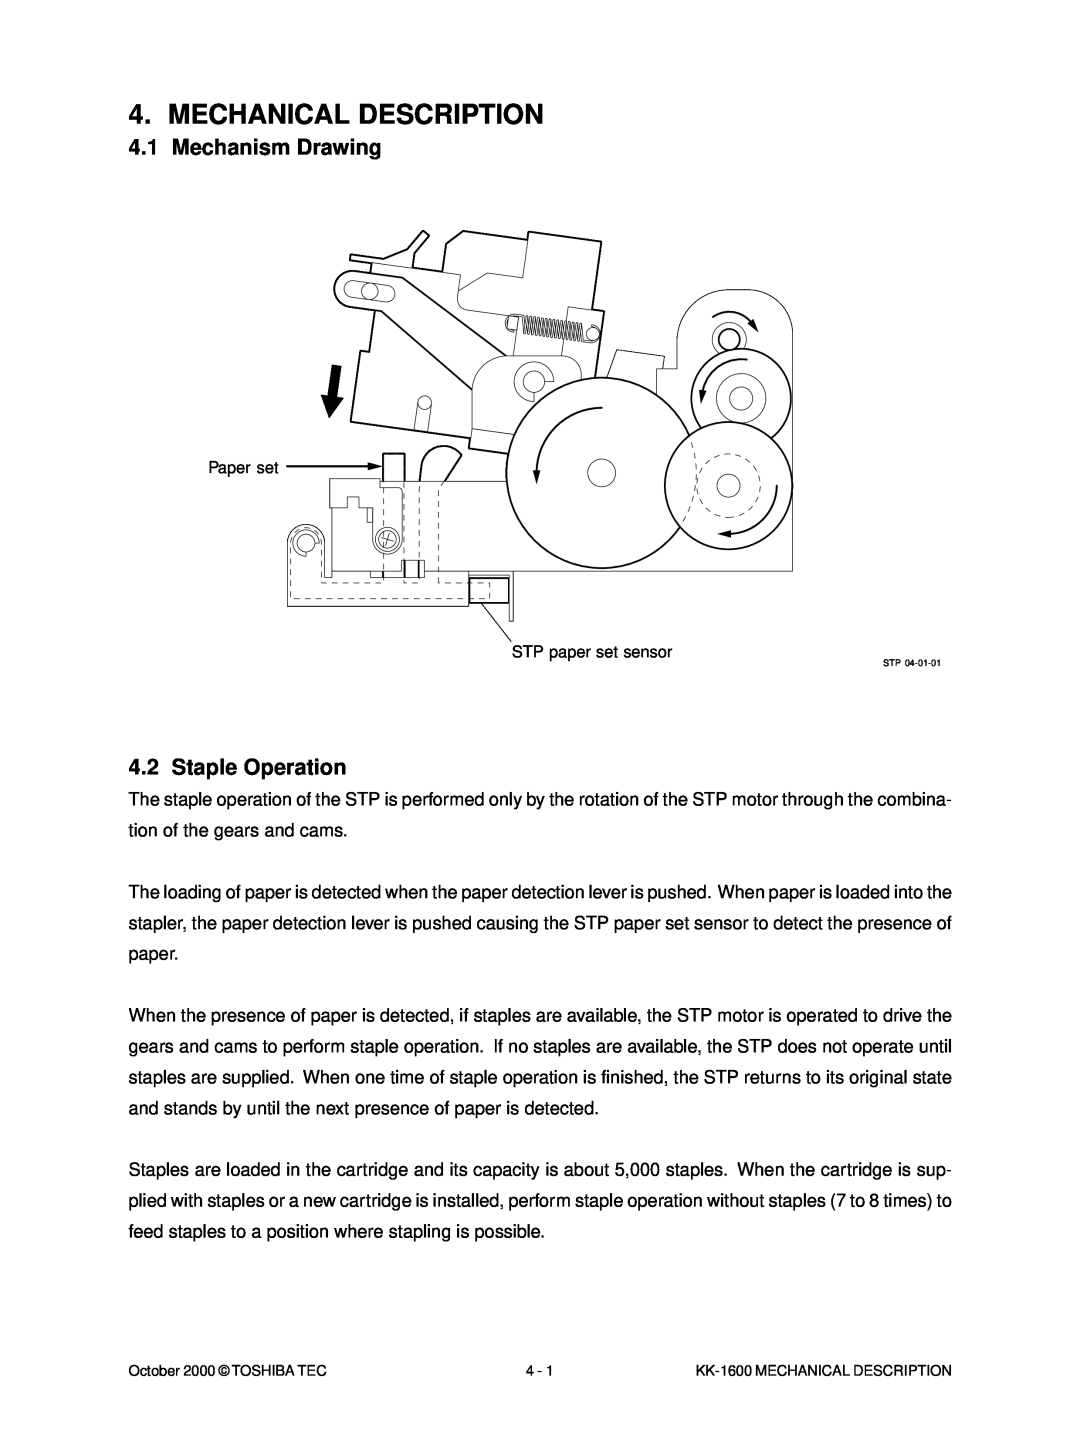 Toshiba KK-1600 manual Mechanical Description, Mechanism Drawing, Staple Operation 